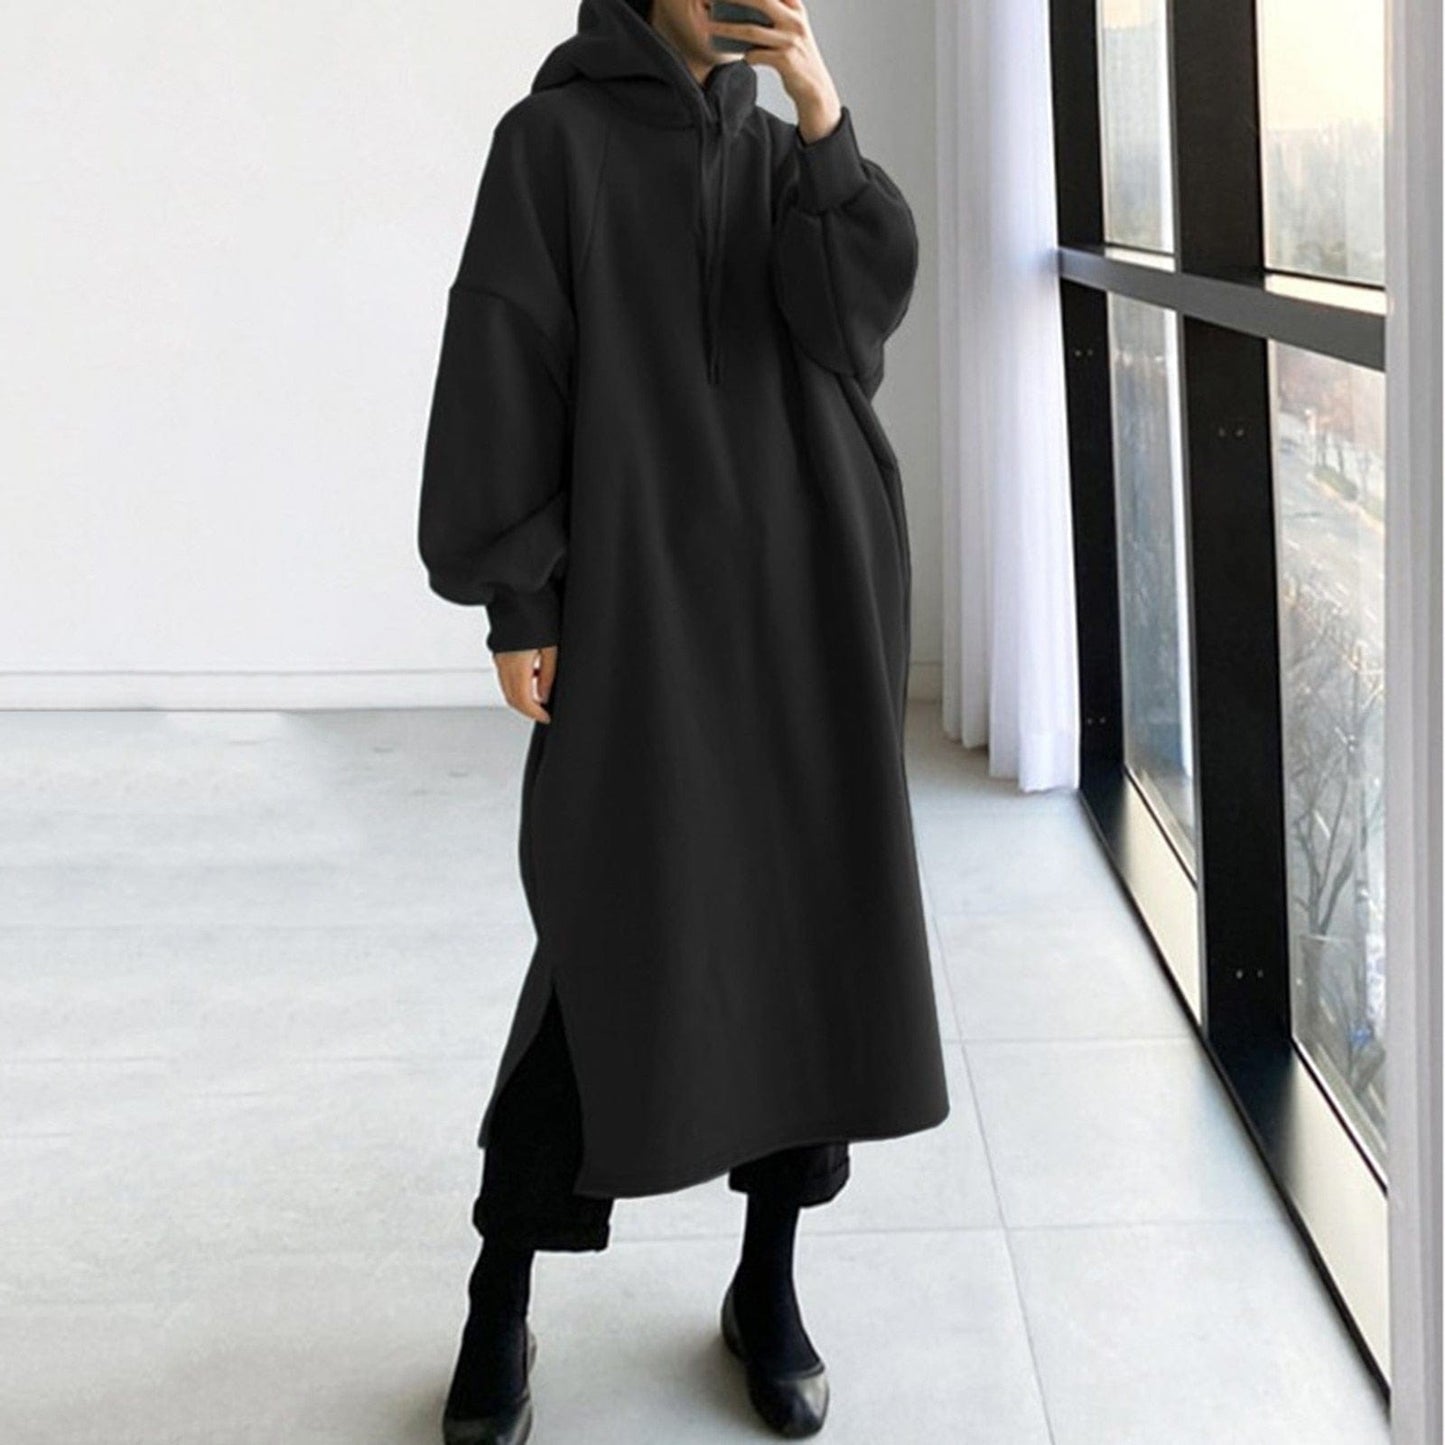 2022 Stylish Hooded Hoodies Dress Casual Long Sleeve Maxi Vestidos Female Drawstring Robe Femme Robe Winter Warm Pullovers - Dresses